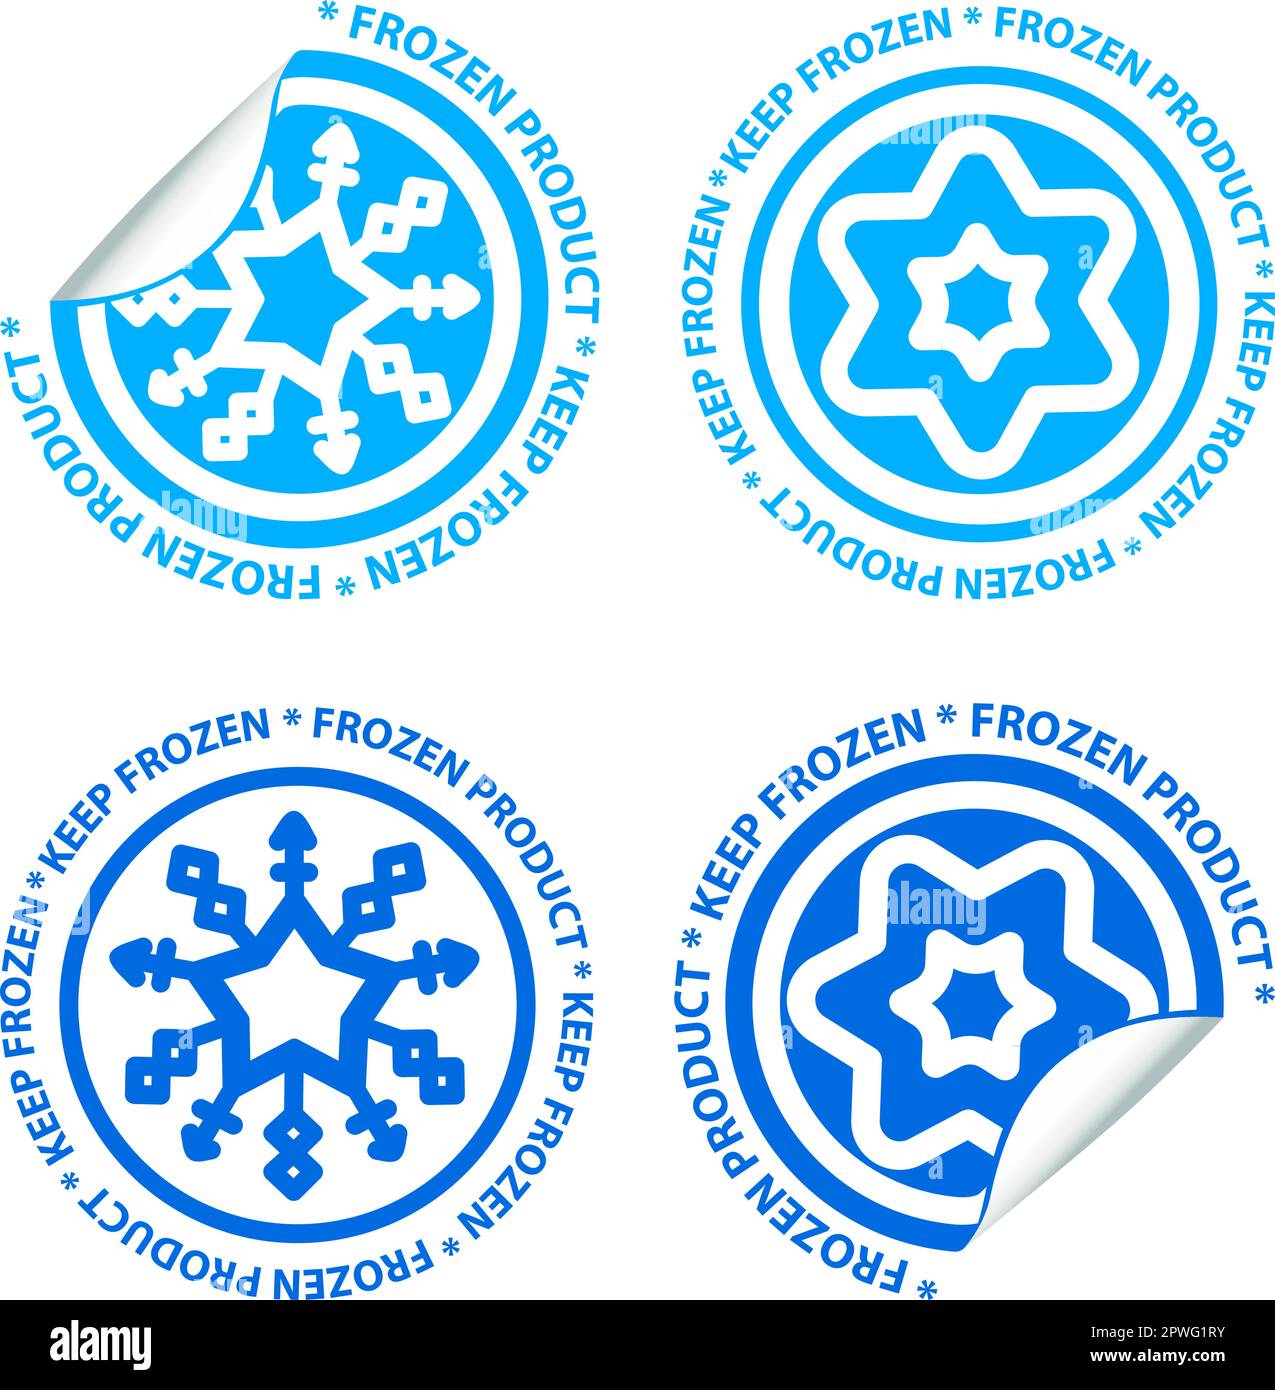 Keep frozen label icons. Frozen food signage. Vector illustration set Stock Vector